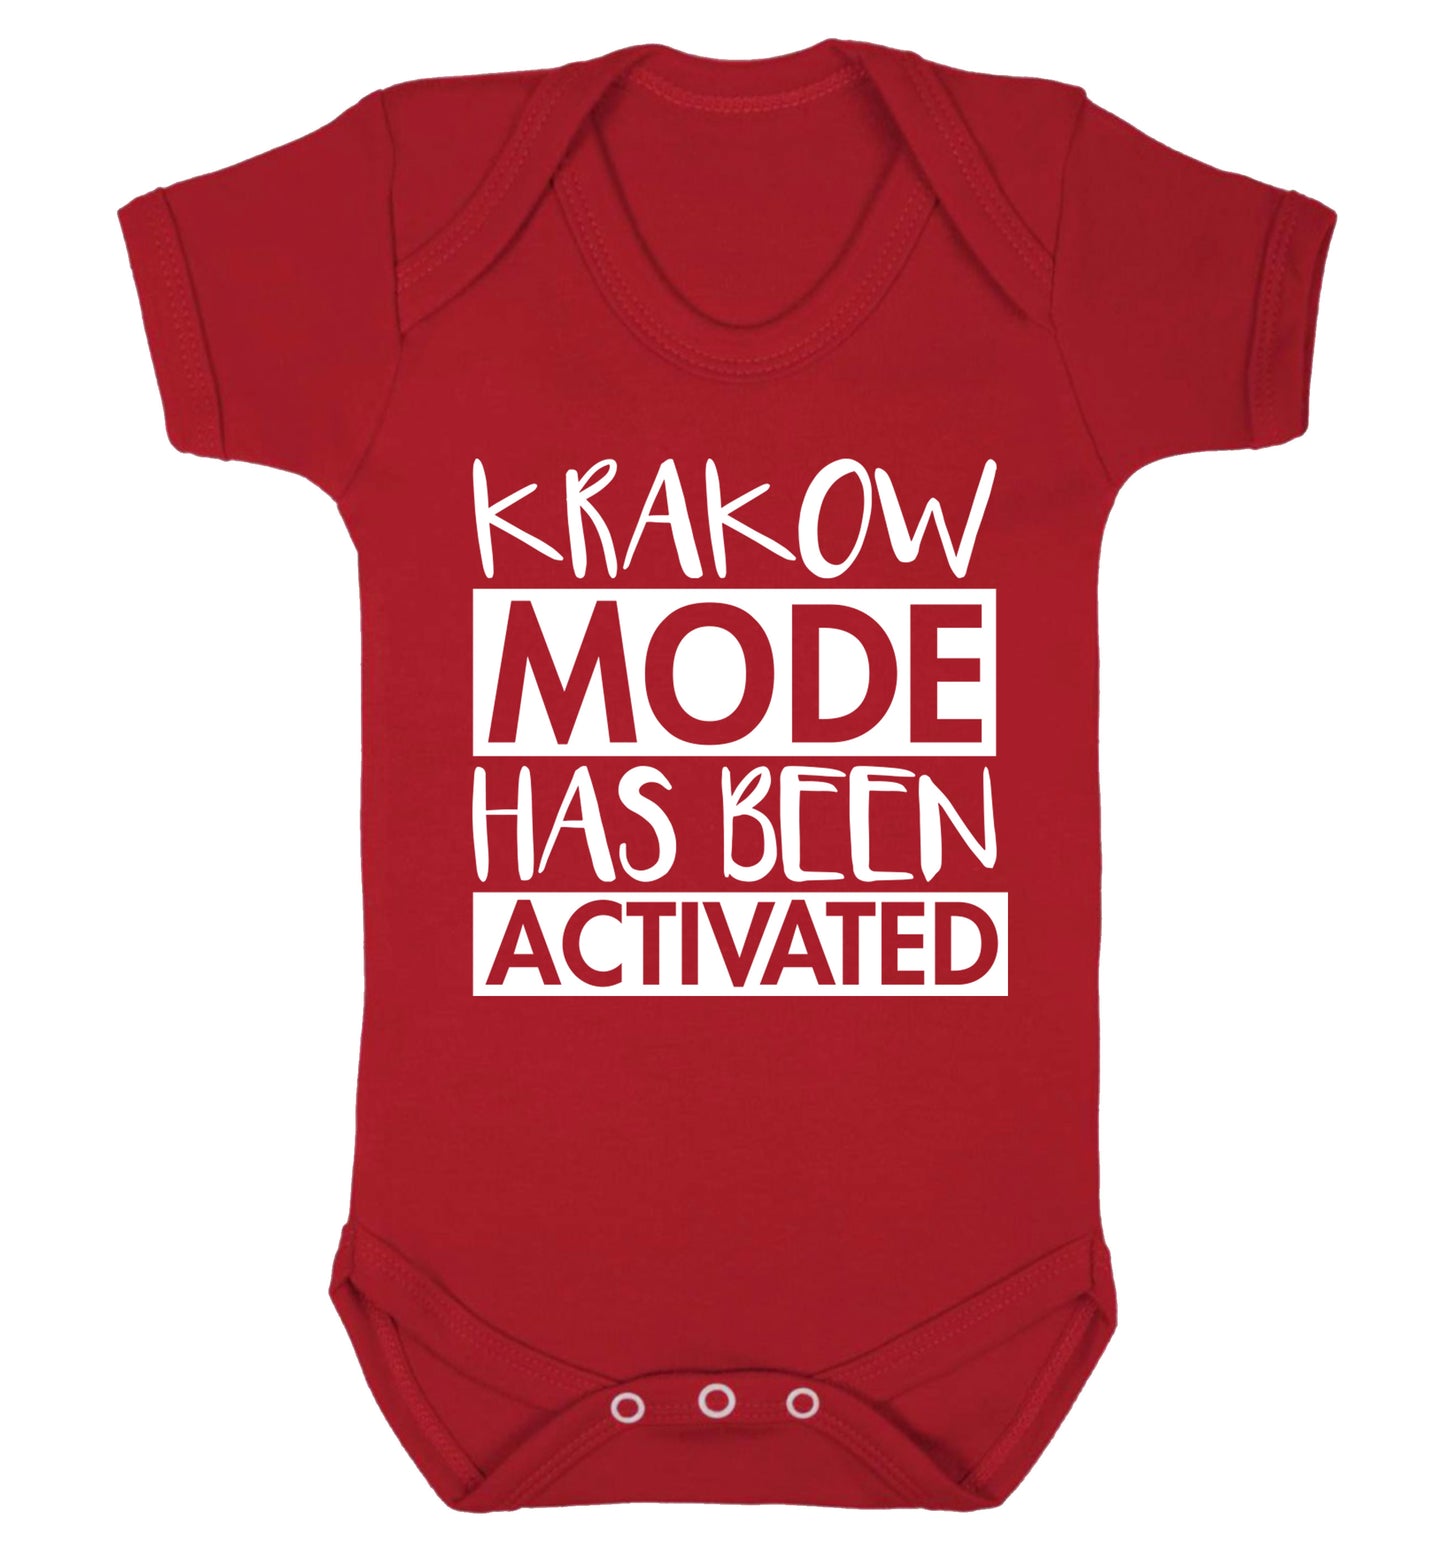 Krakow mode has been activated Baby Vest red 18-24 months